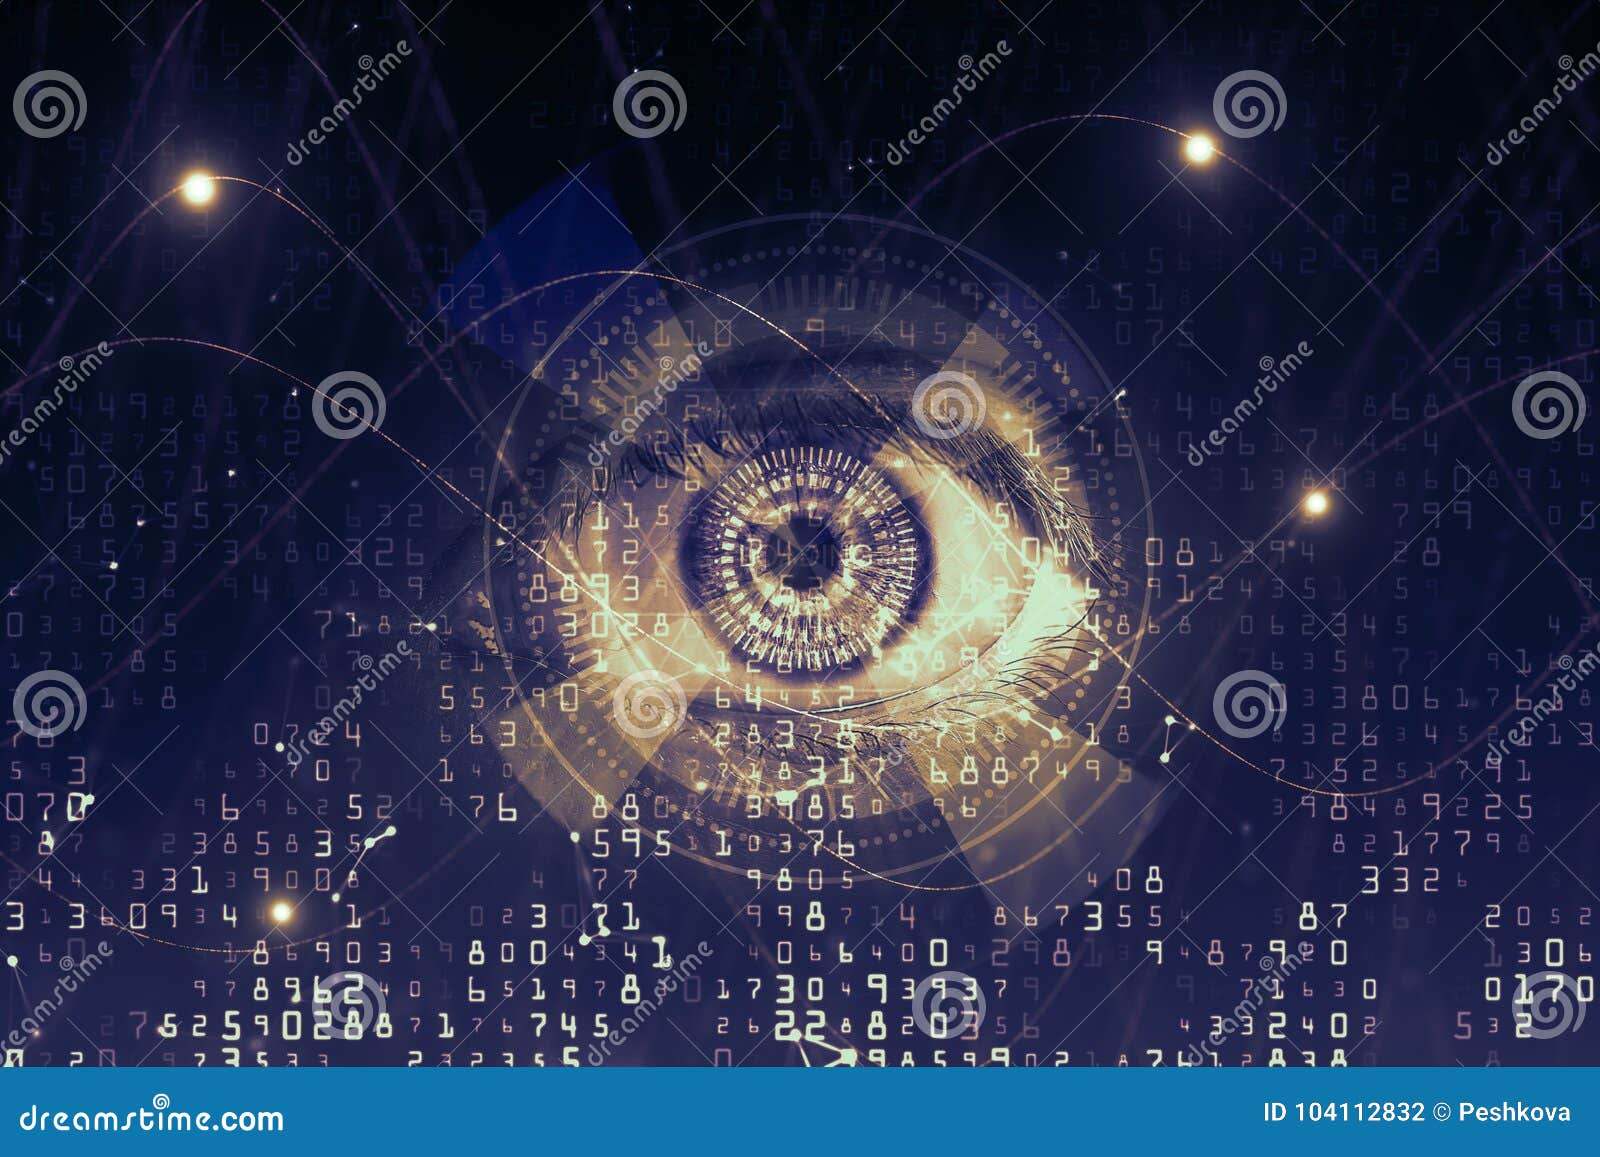 Digital eye wallpaper stock illustration. Illustration of blue - 104112832